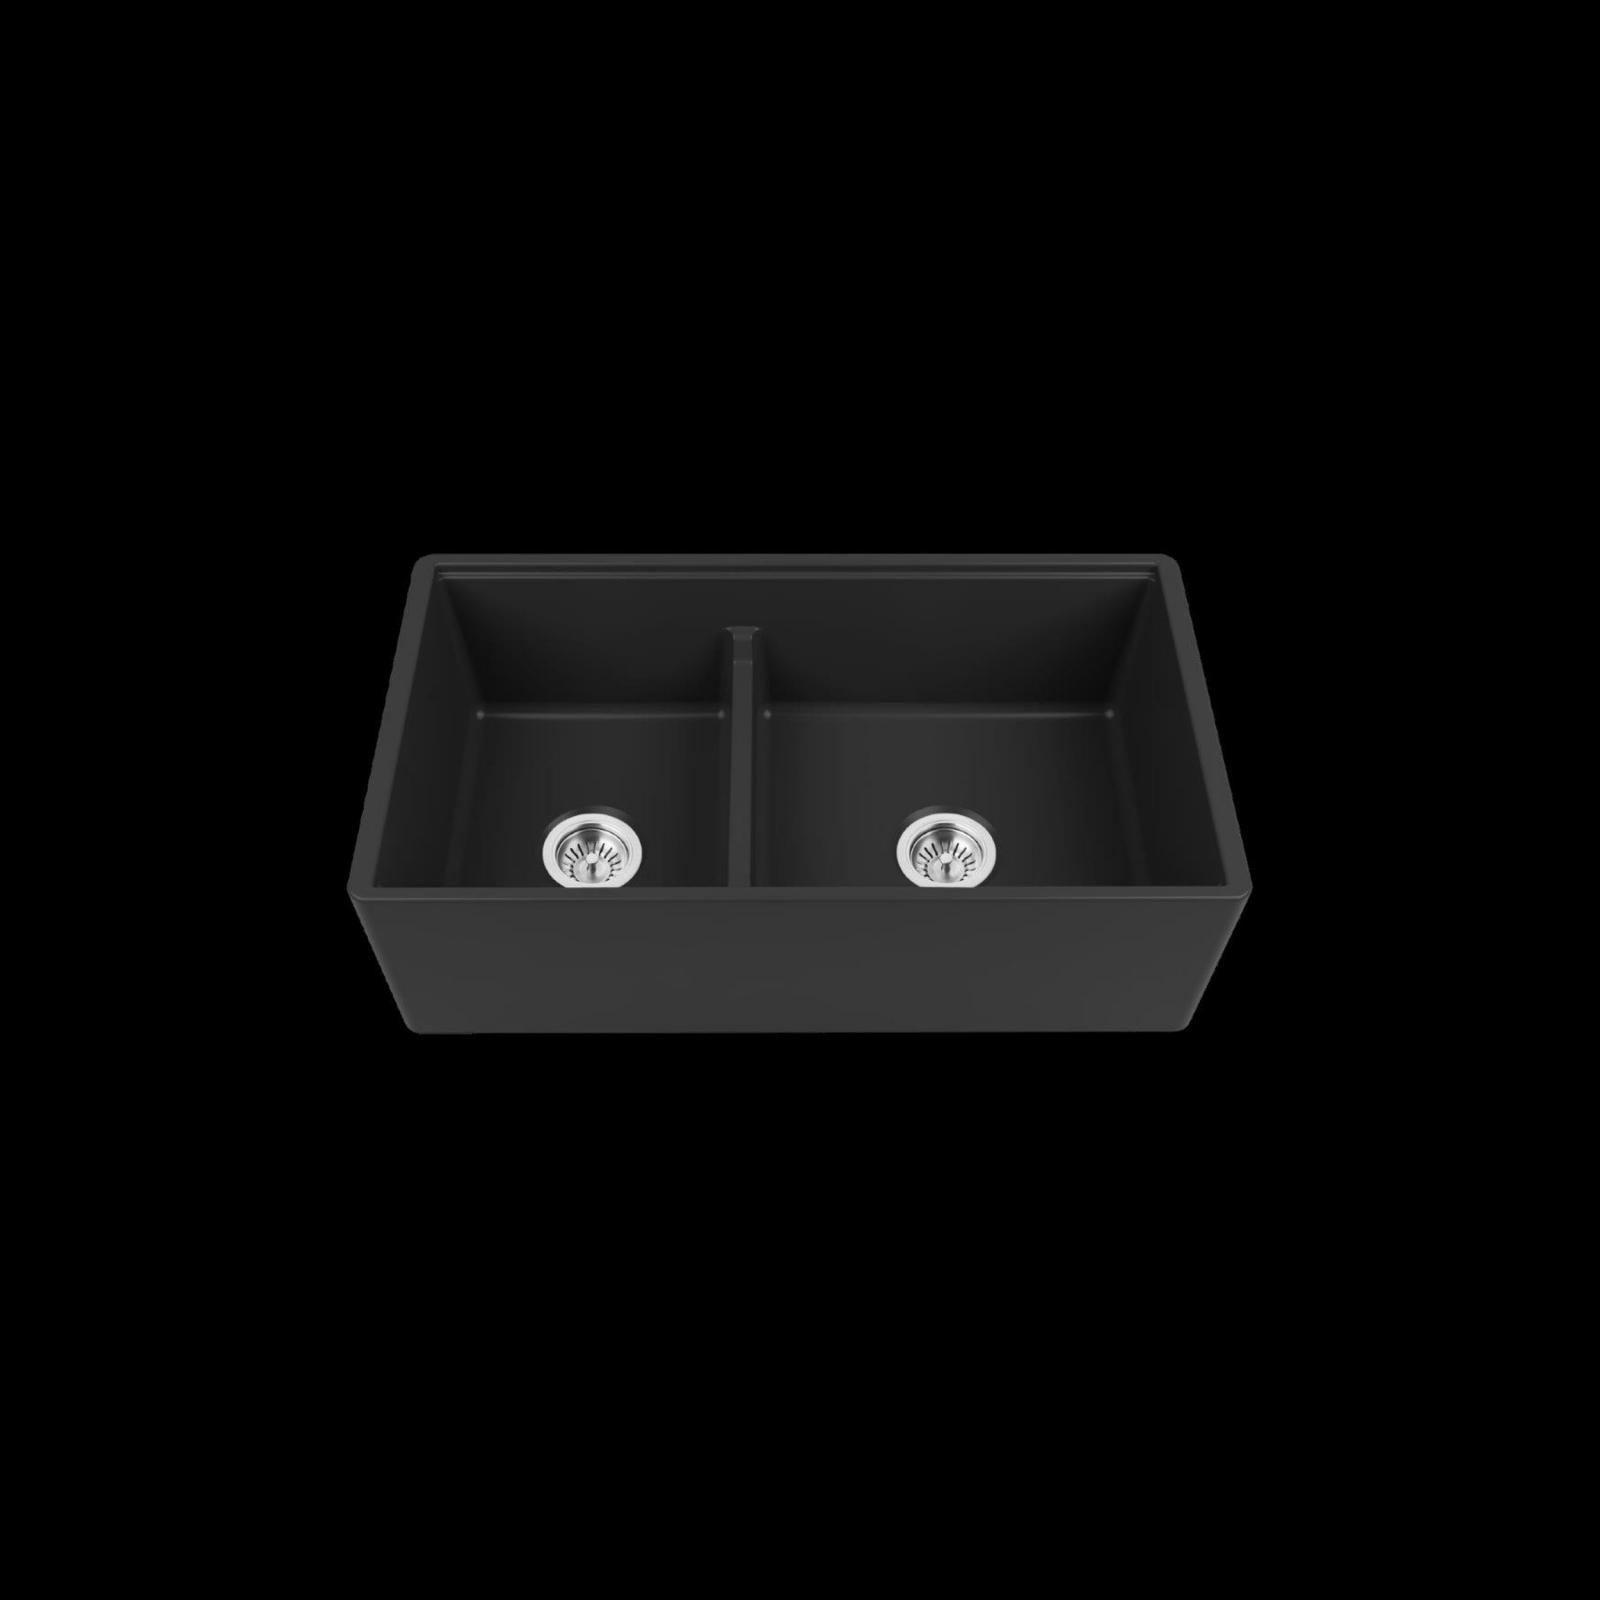 High-quality sink Louis Le Grand II black - single bowl, ceramic - 2